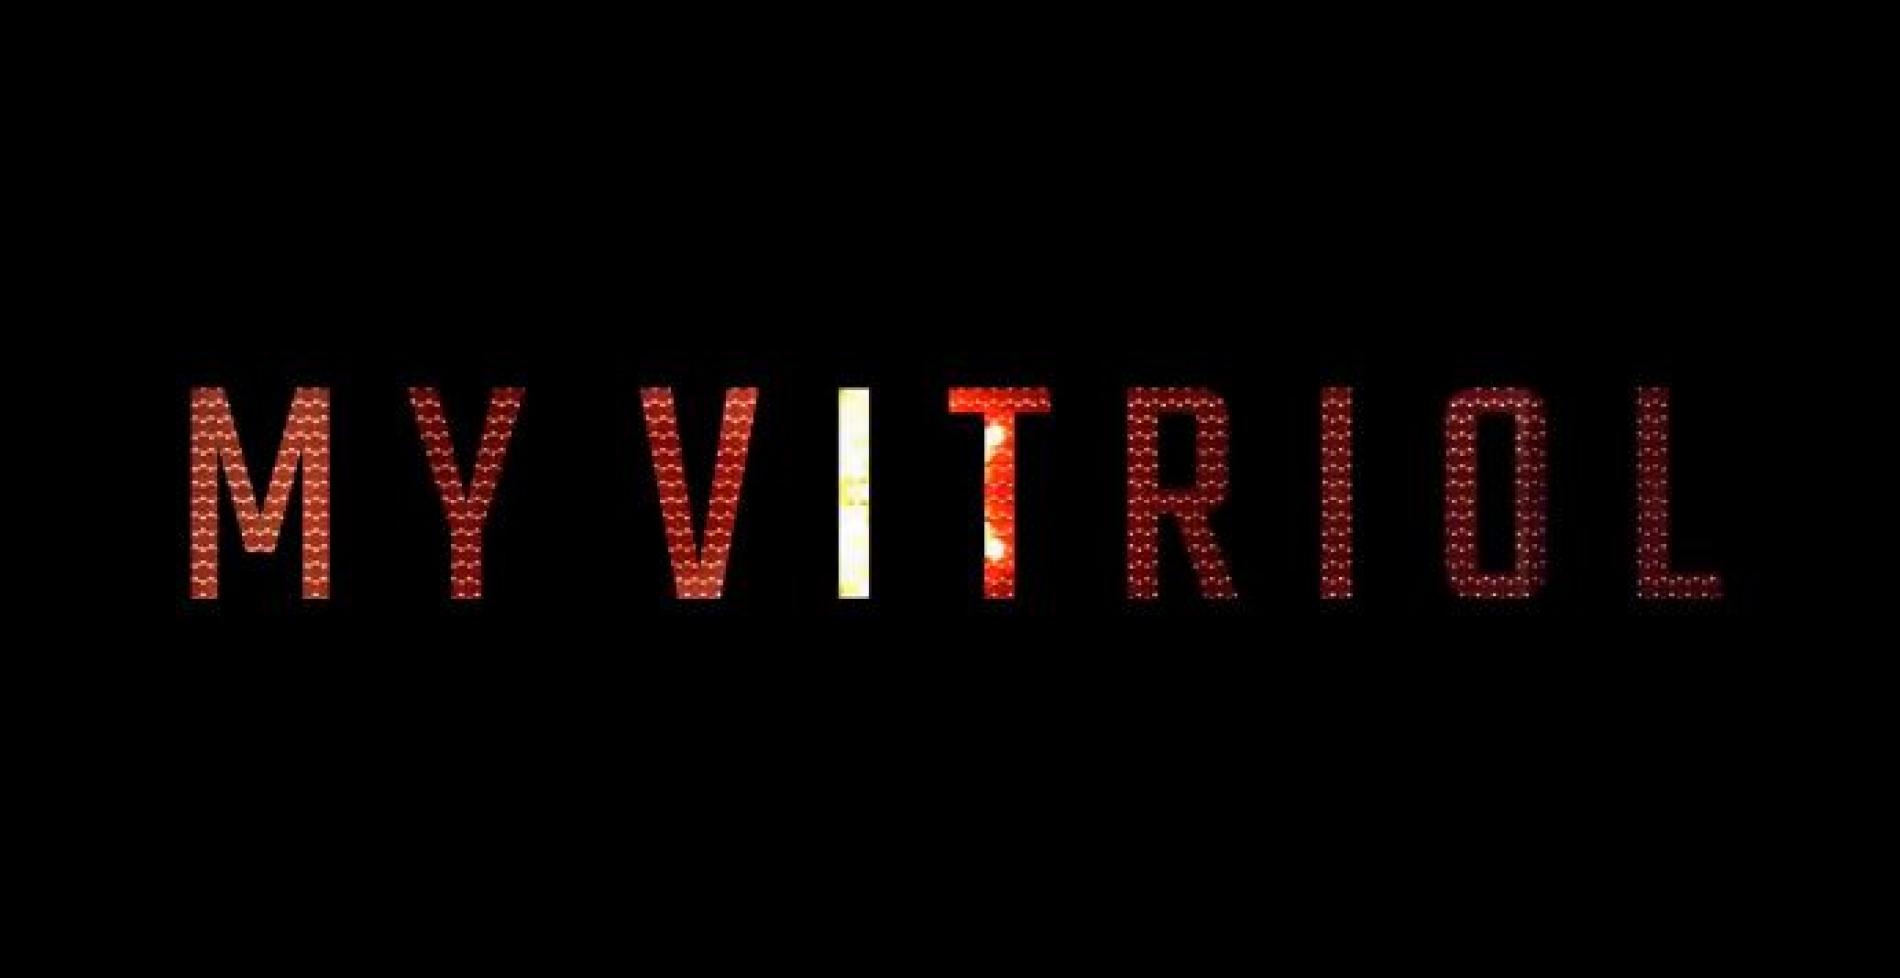 My Vitriol – It’s No Good (Depeche Mode Tribute 2018)